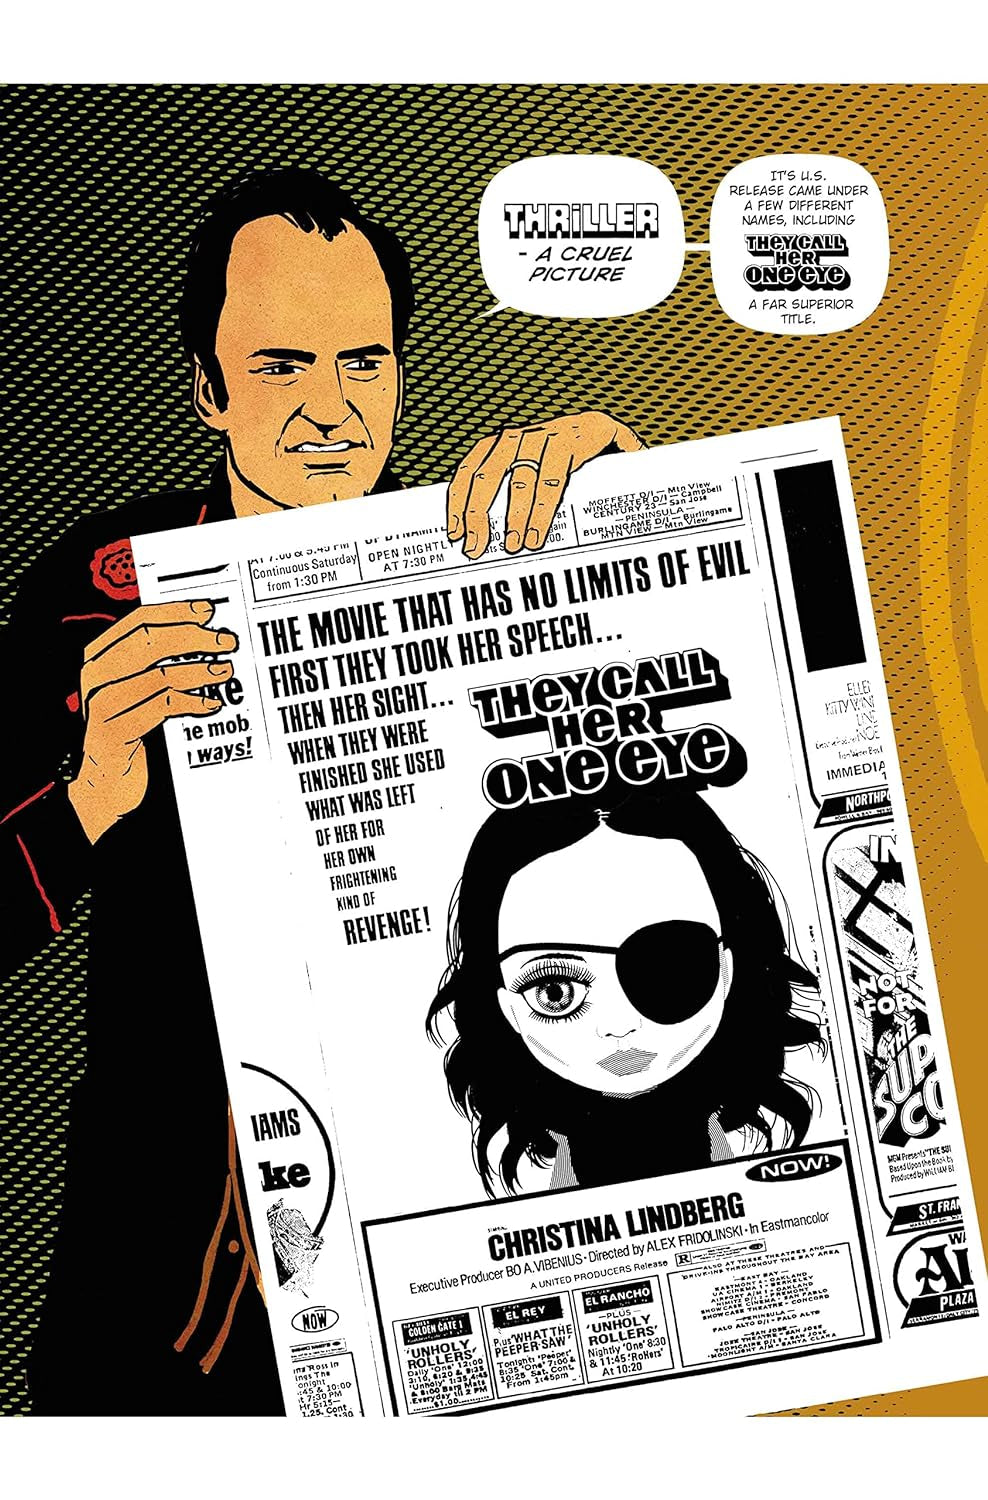 Quentin by Tarantino